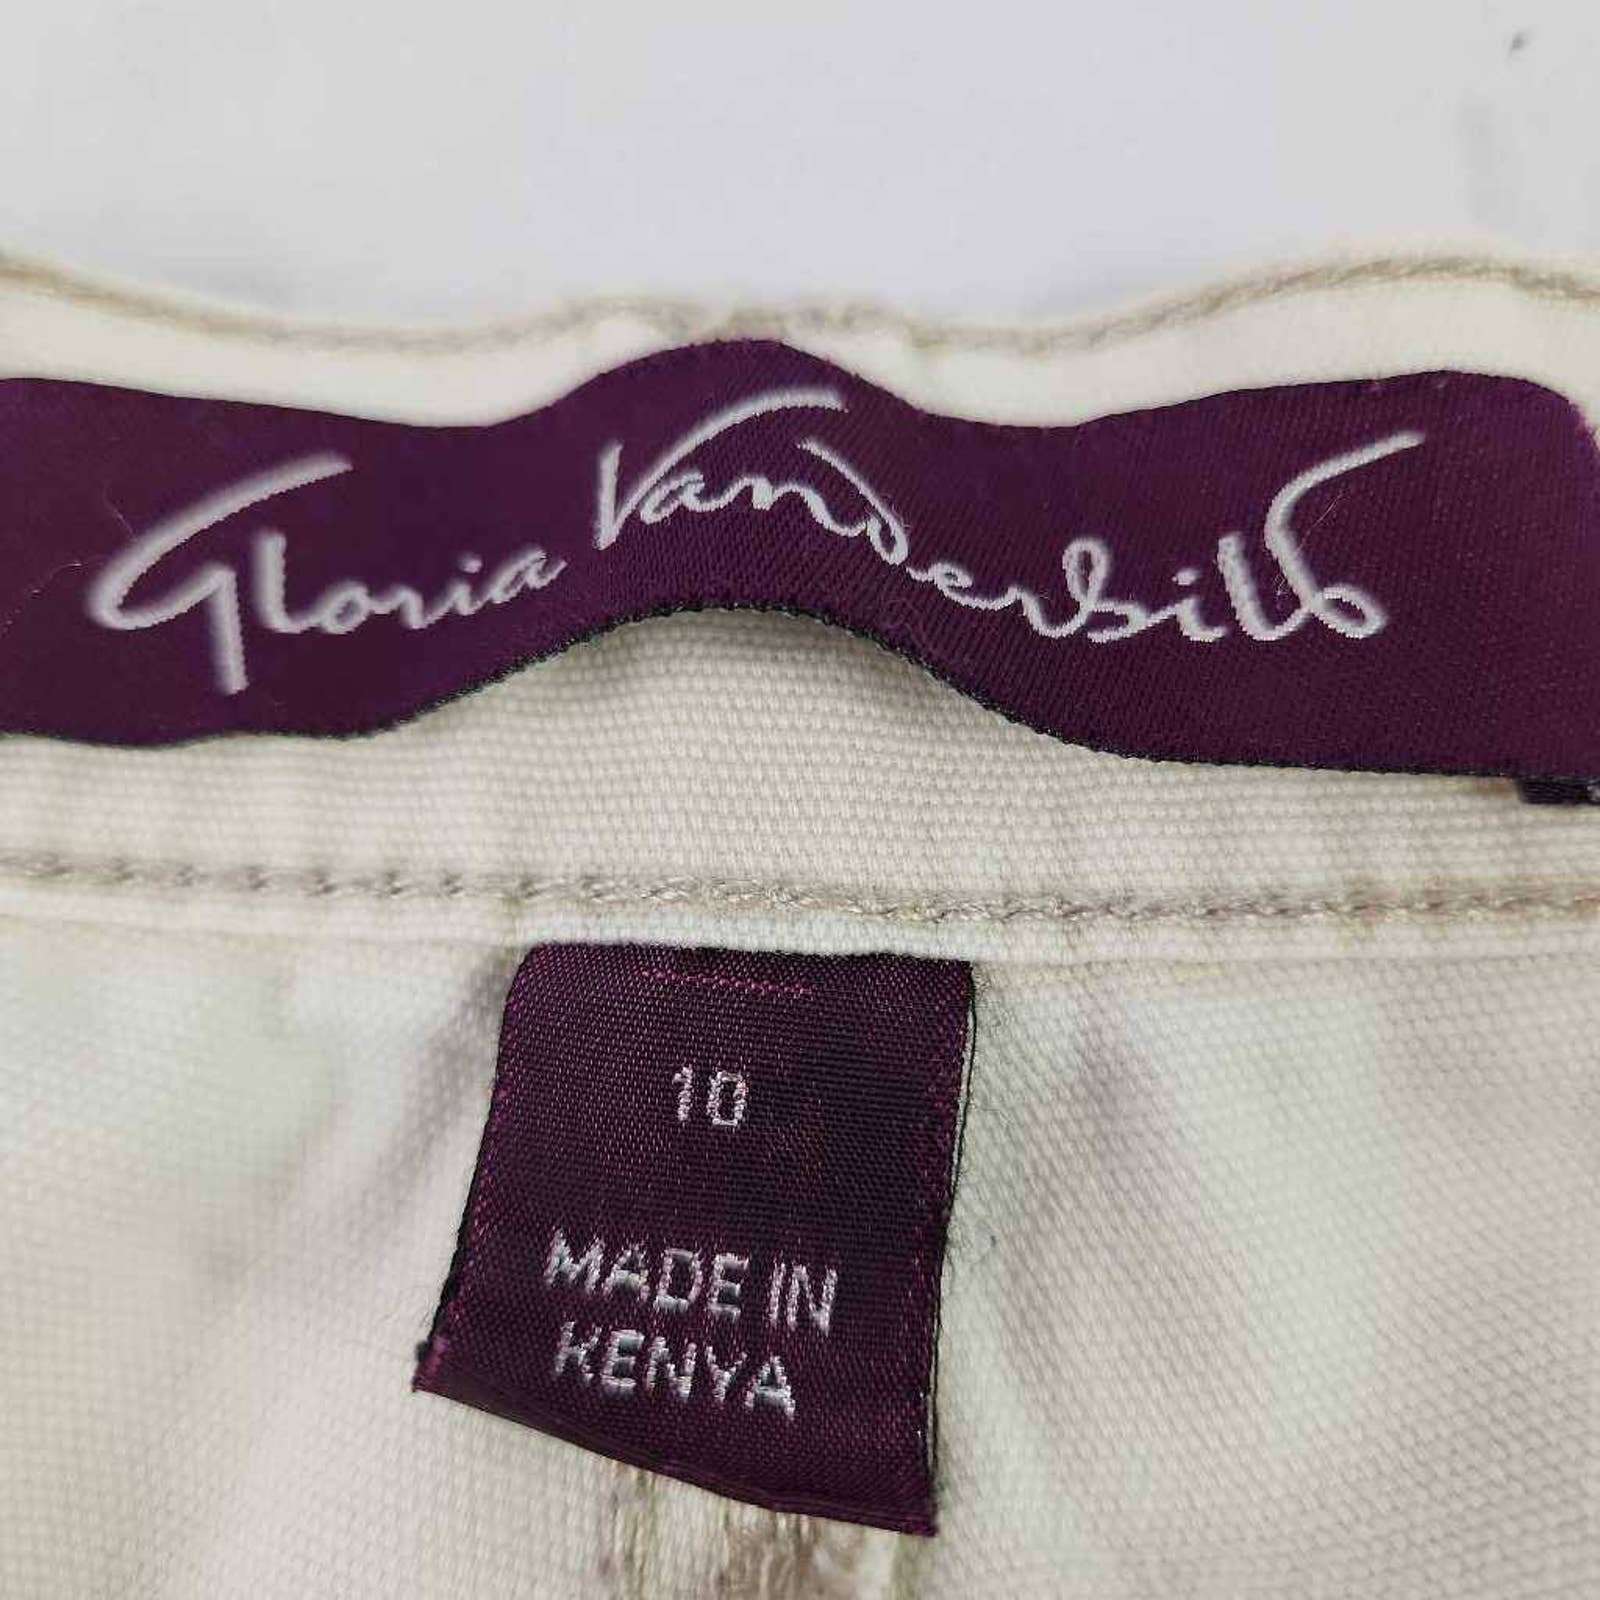 the Lowest price Gloria Vanderbilt Womens Capri Pants Beige Pockets Twill Cropped Khaki Summer 10 JiLGkjt4h Fashion